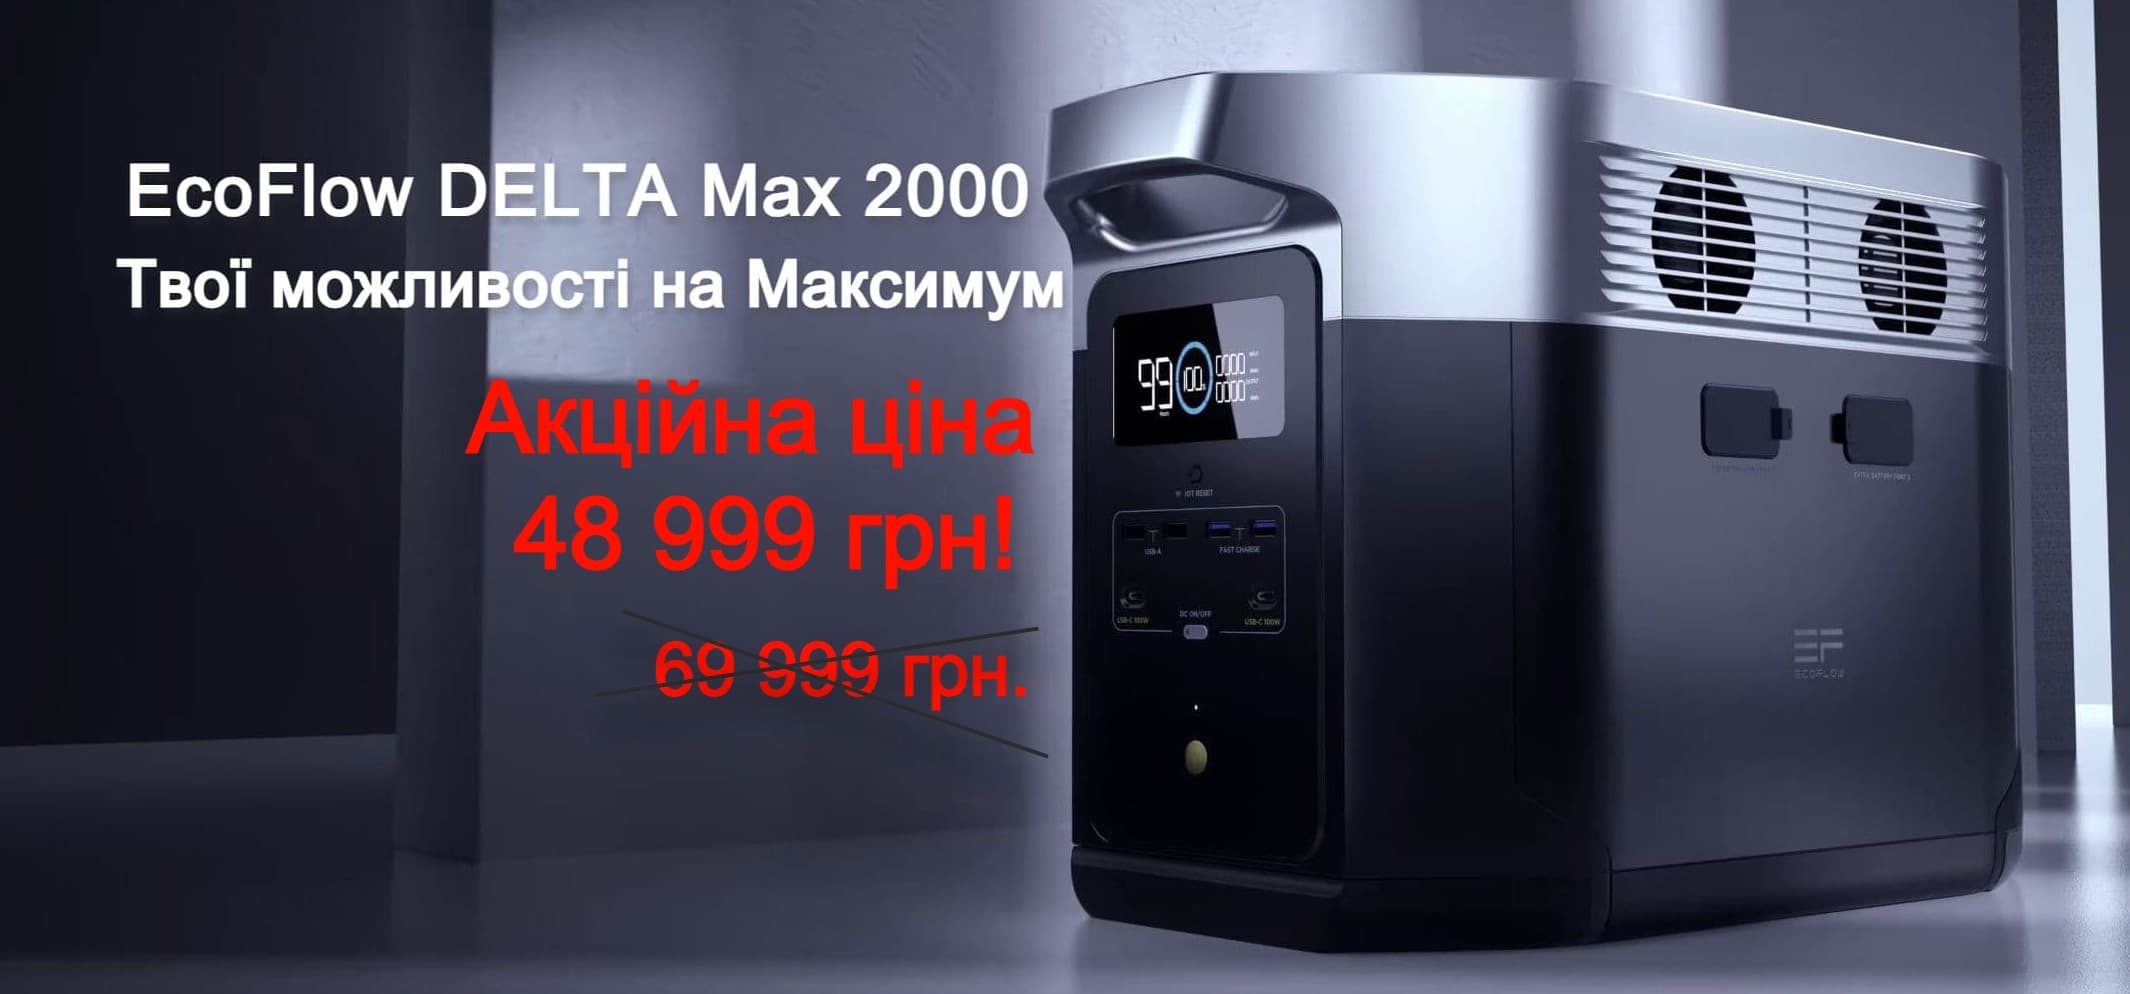 EcoFlow-DELTA-MAX-2000-Banner-002-Edit-Ready-opti